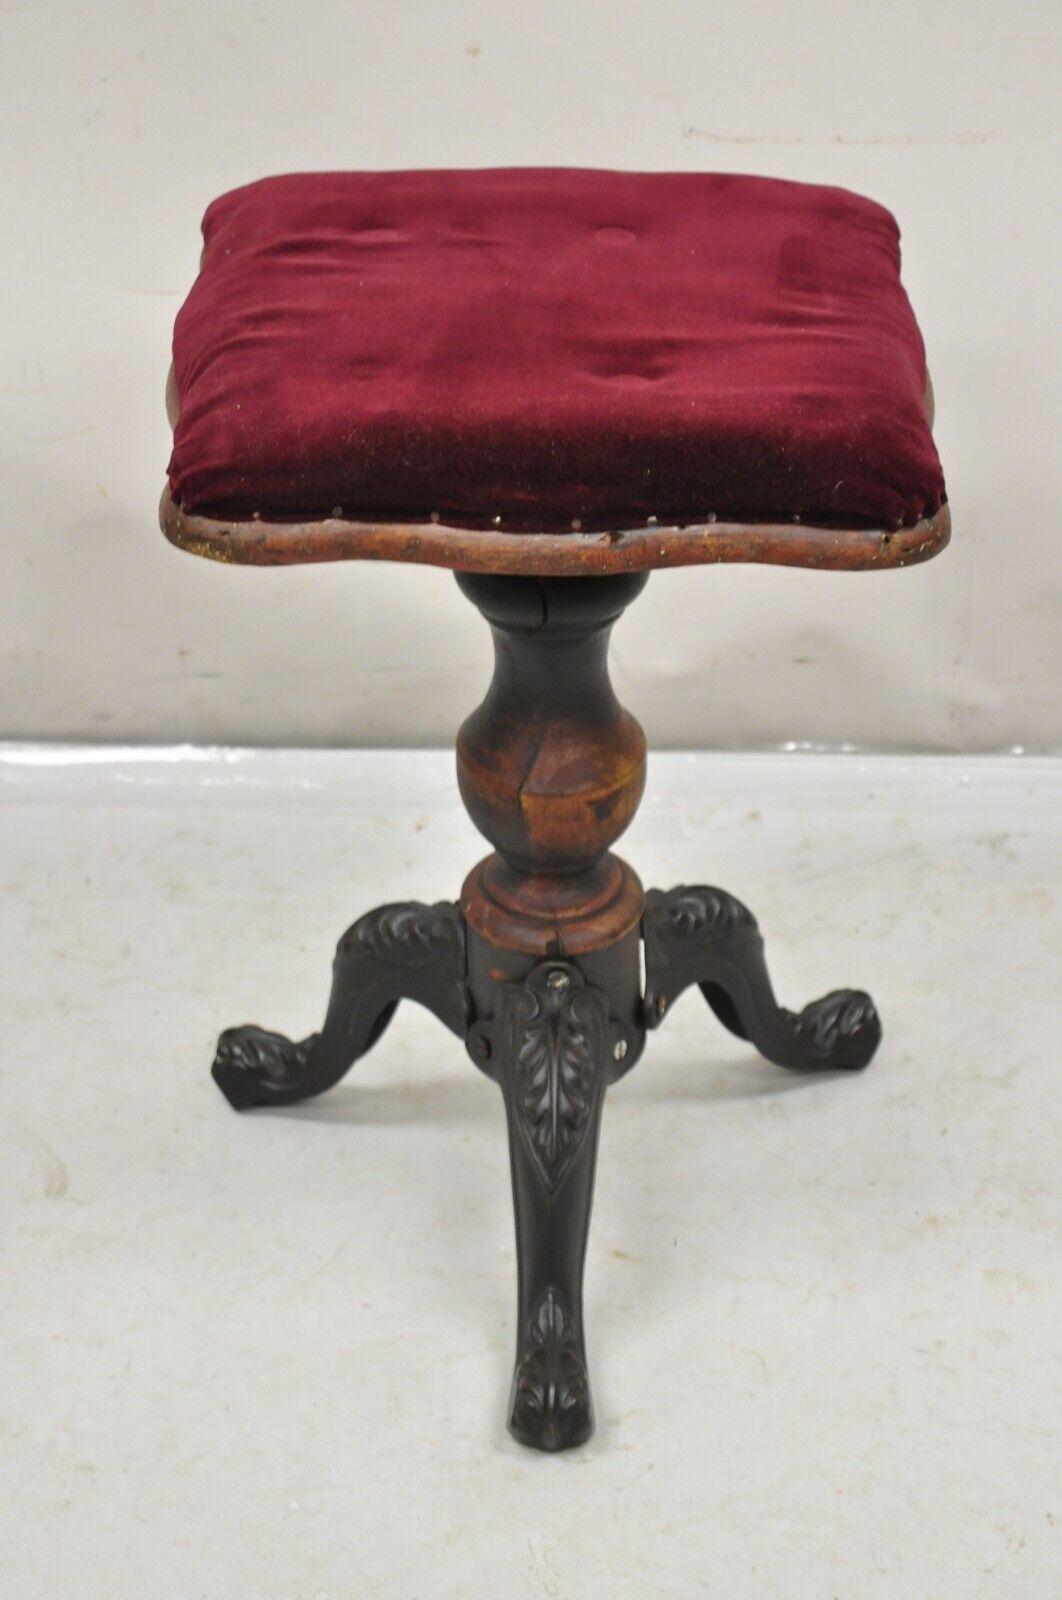 Antique American Victorian Cast Iron and Wood Tripod Pedestal Adjustable Stool. Circa 1900. Measurements:19.5-23